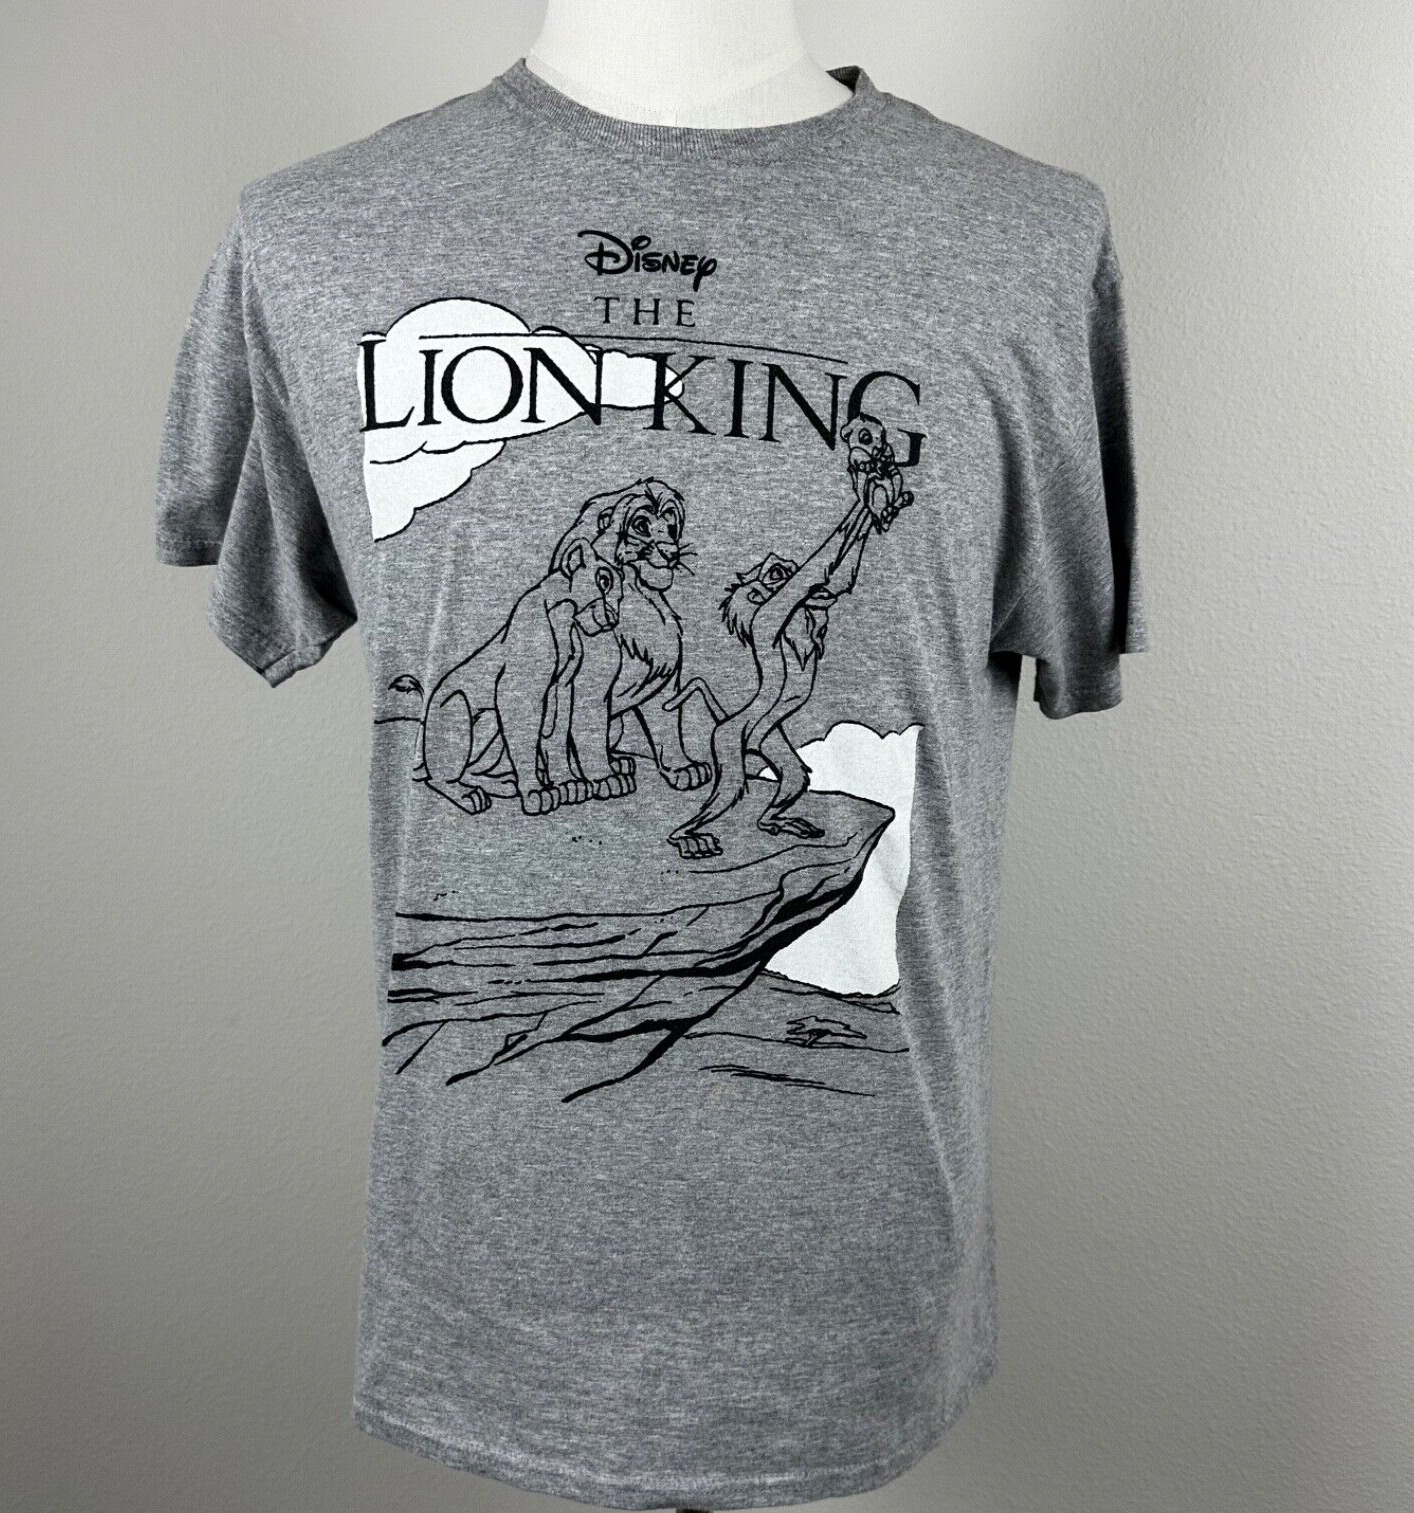 Disney The Lion King Unisex T-Shirt - Size Medium